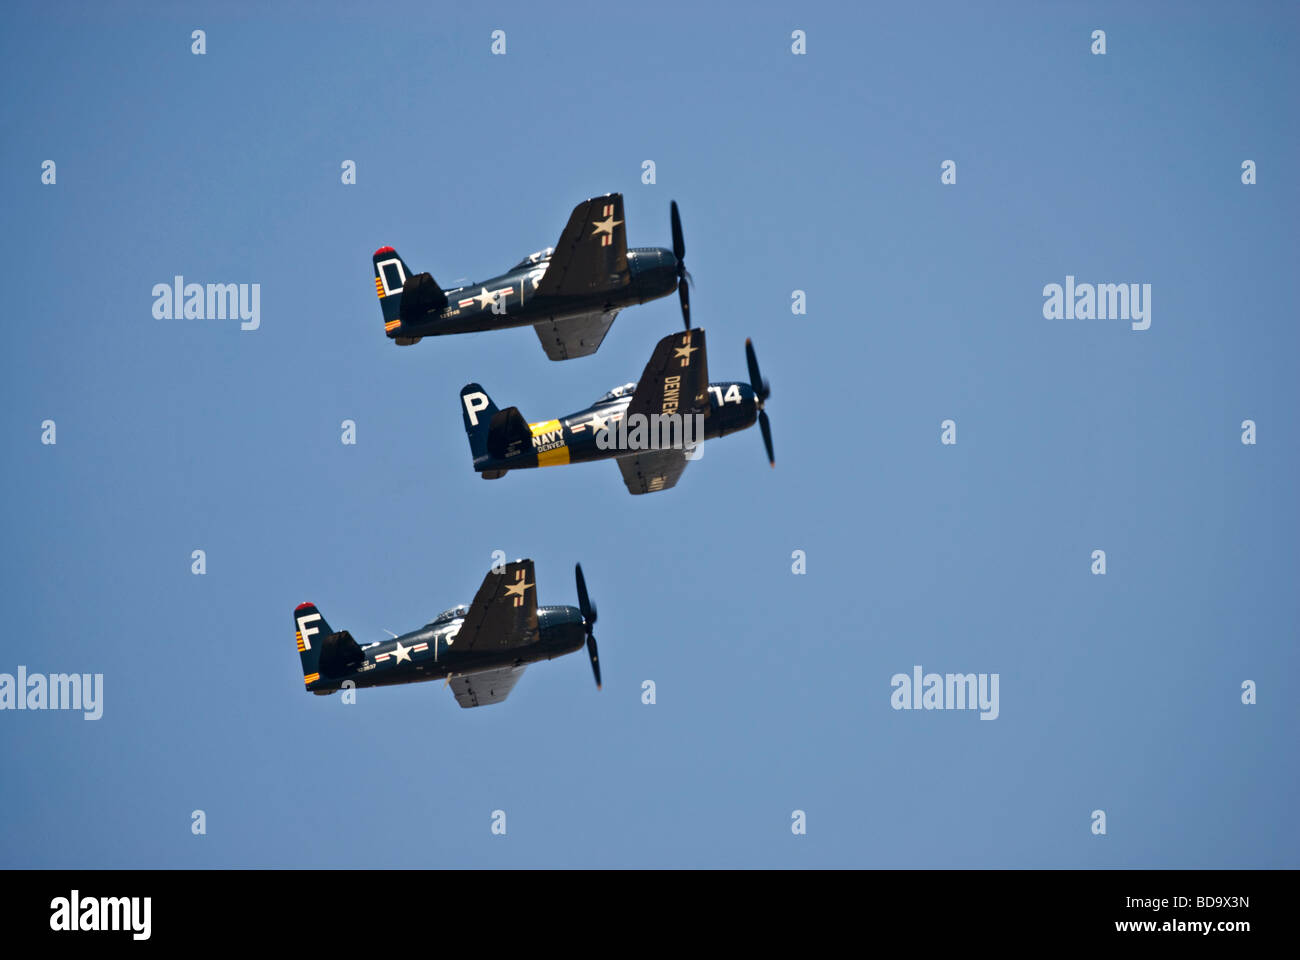 A 3-plane formation Grumman F8F Bearcats flies at an air show. Stock Photo